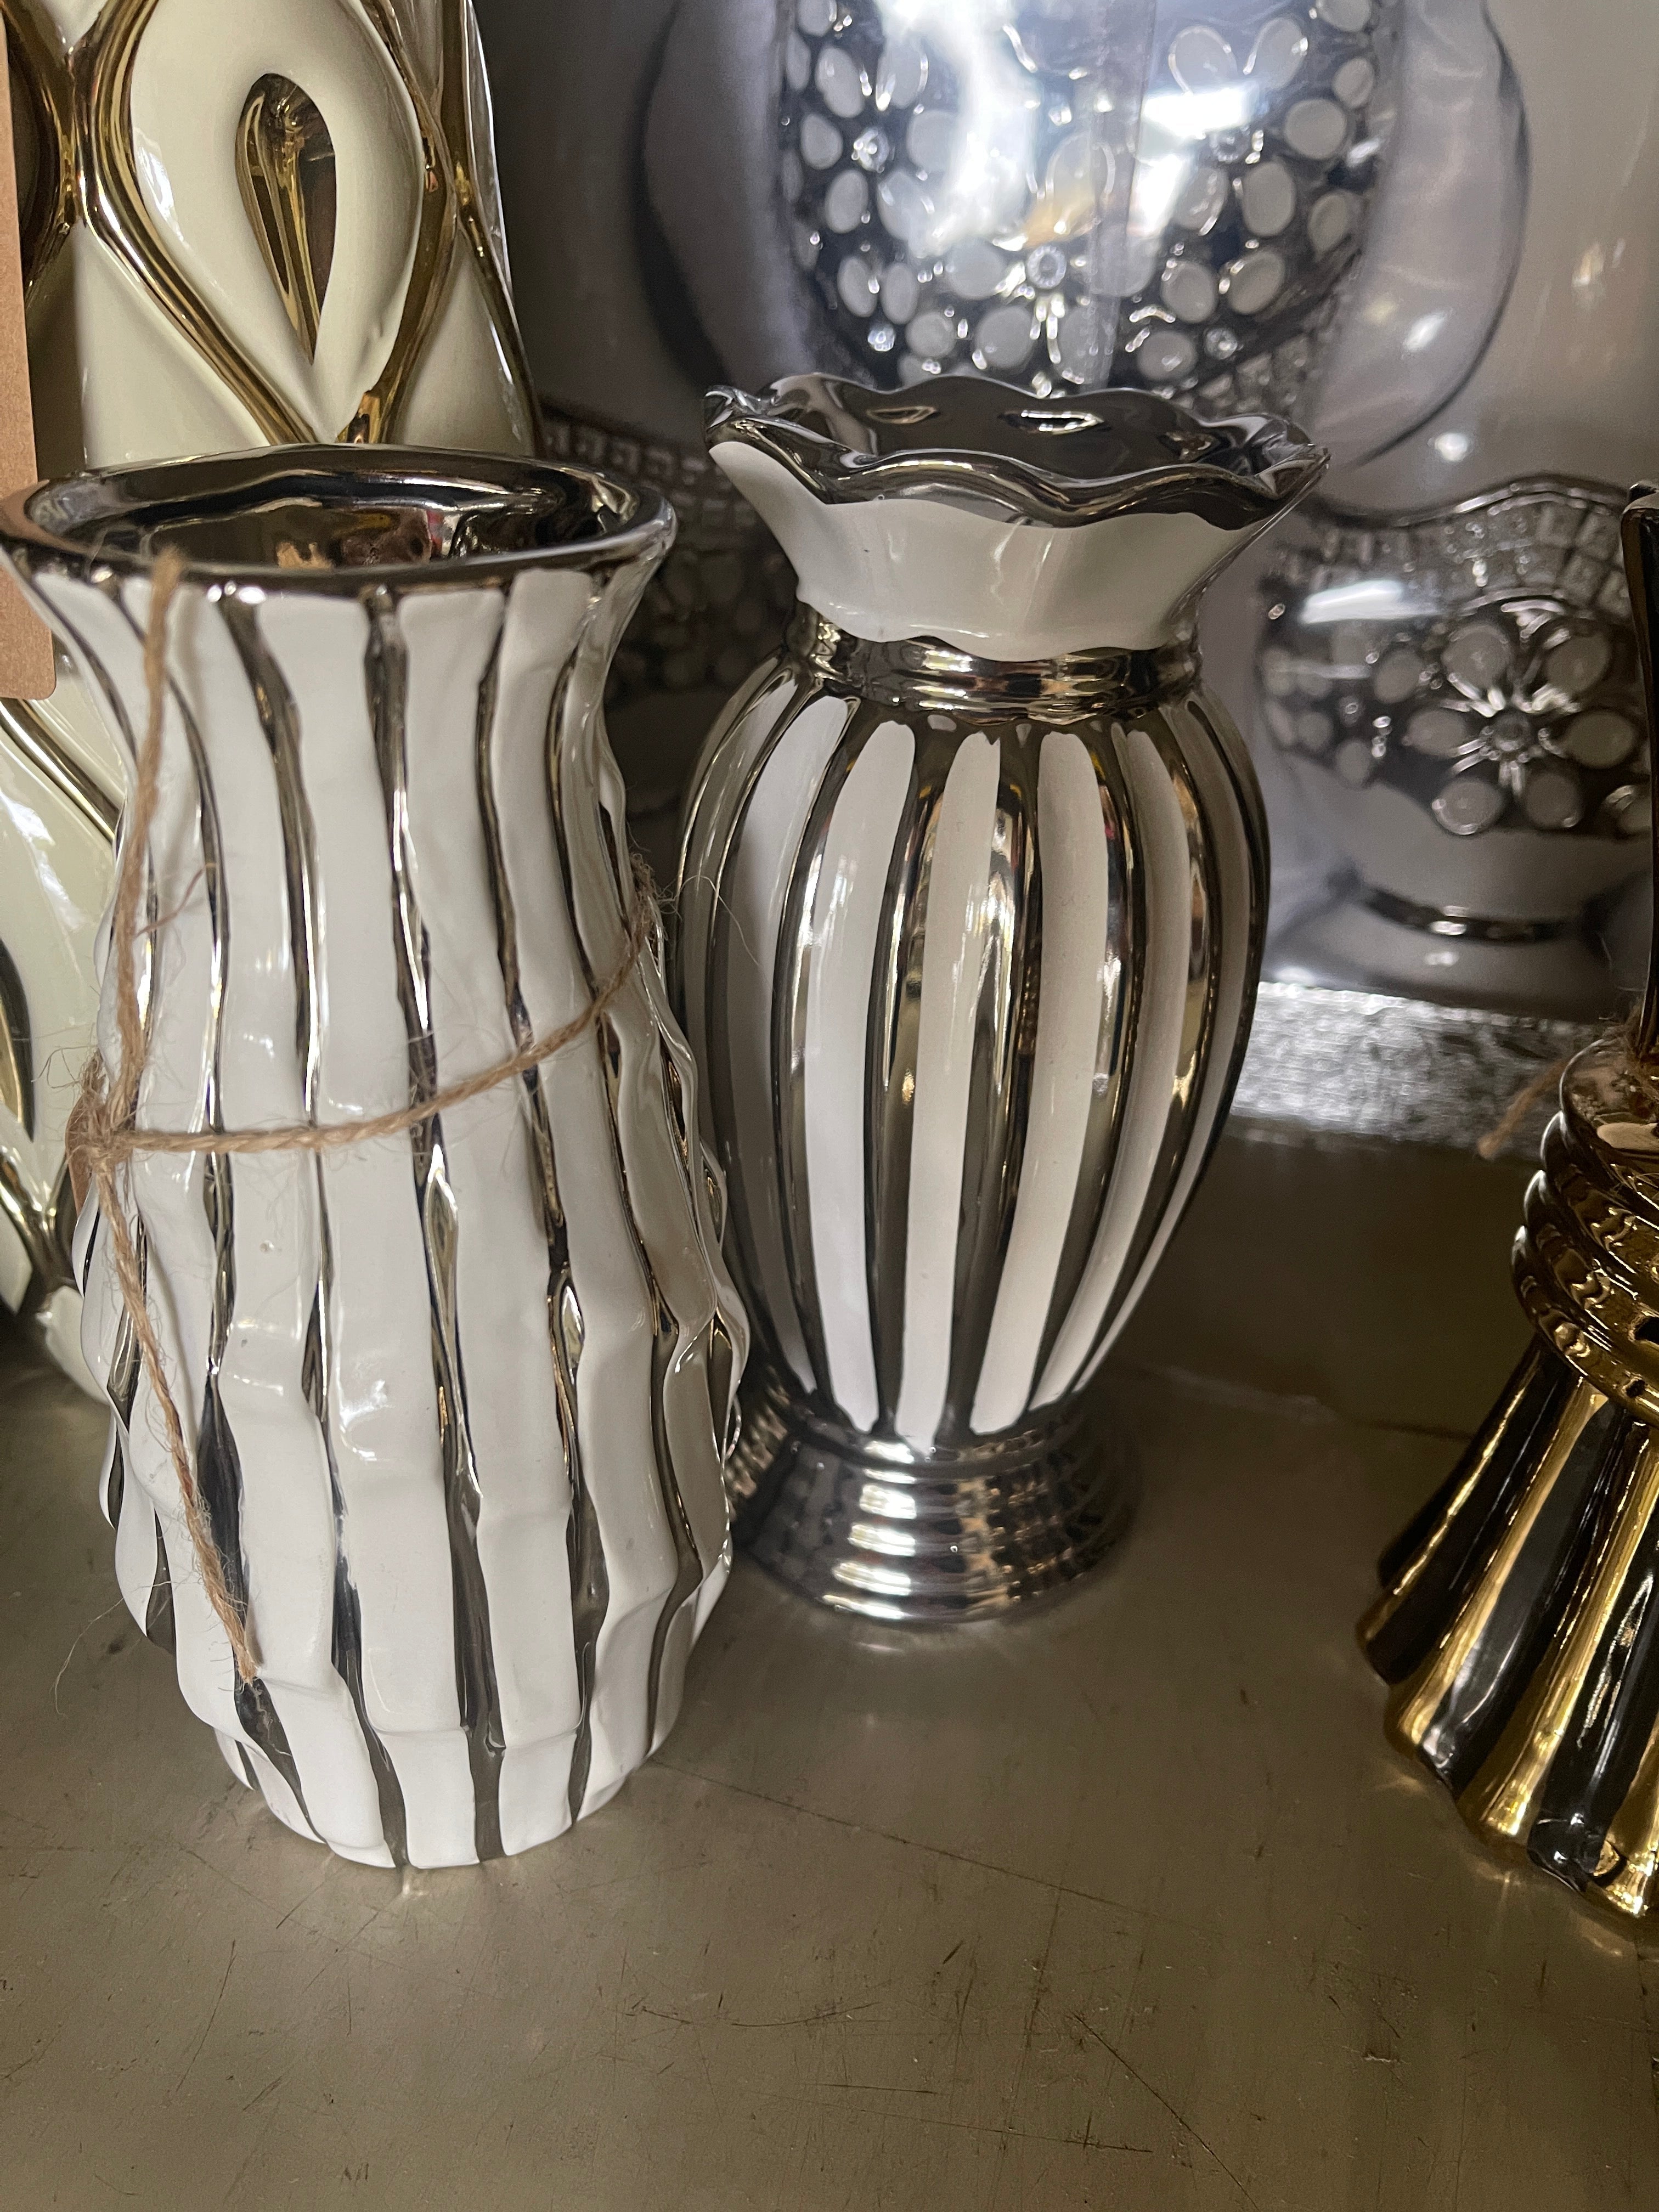 Linen Universe 2 Piece White and Silver Ceramic Vase Set - 7"